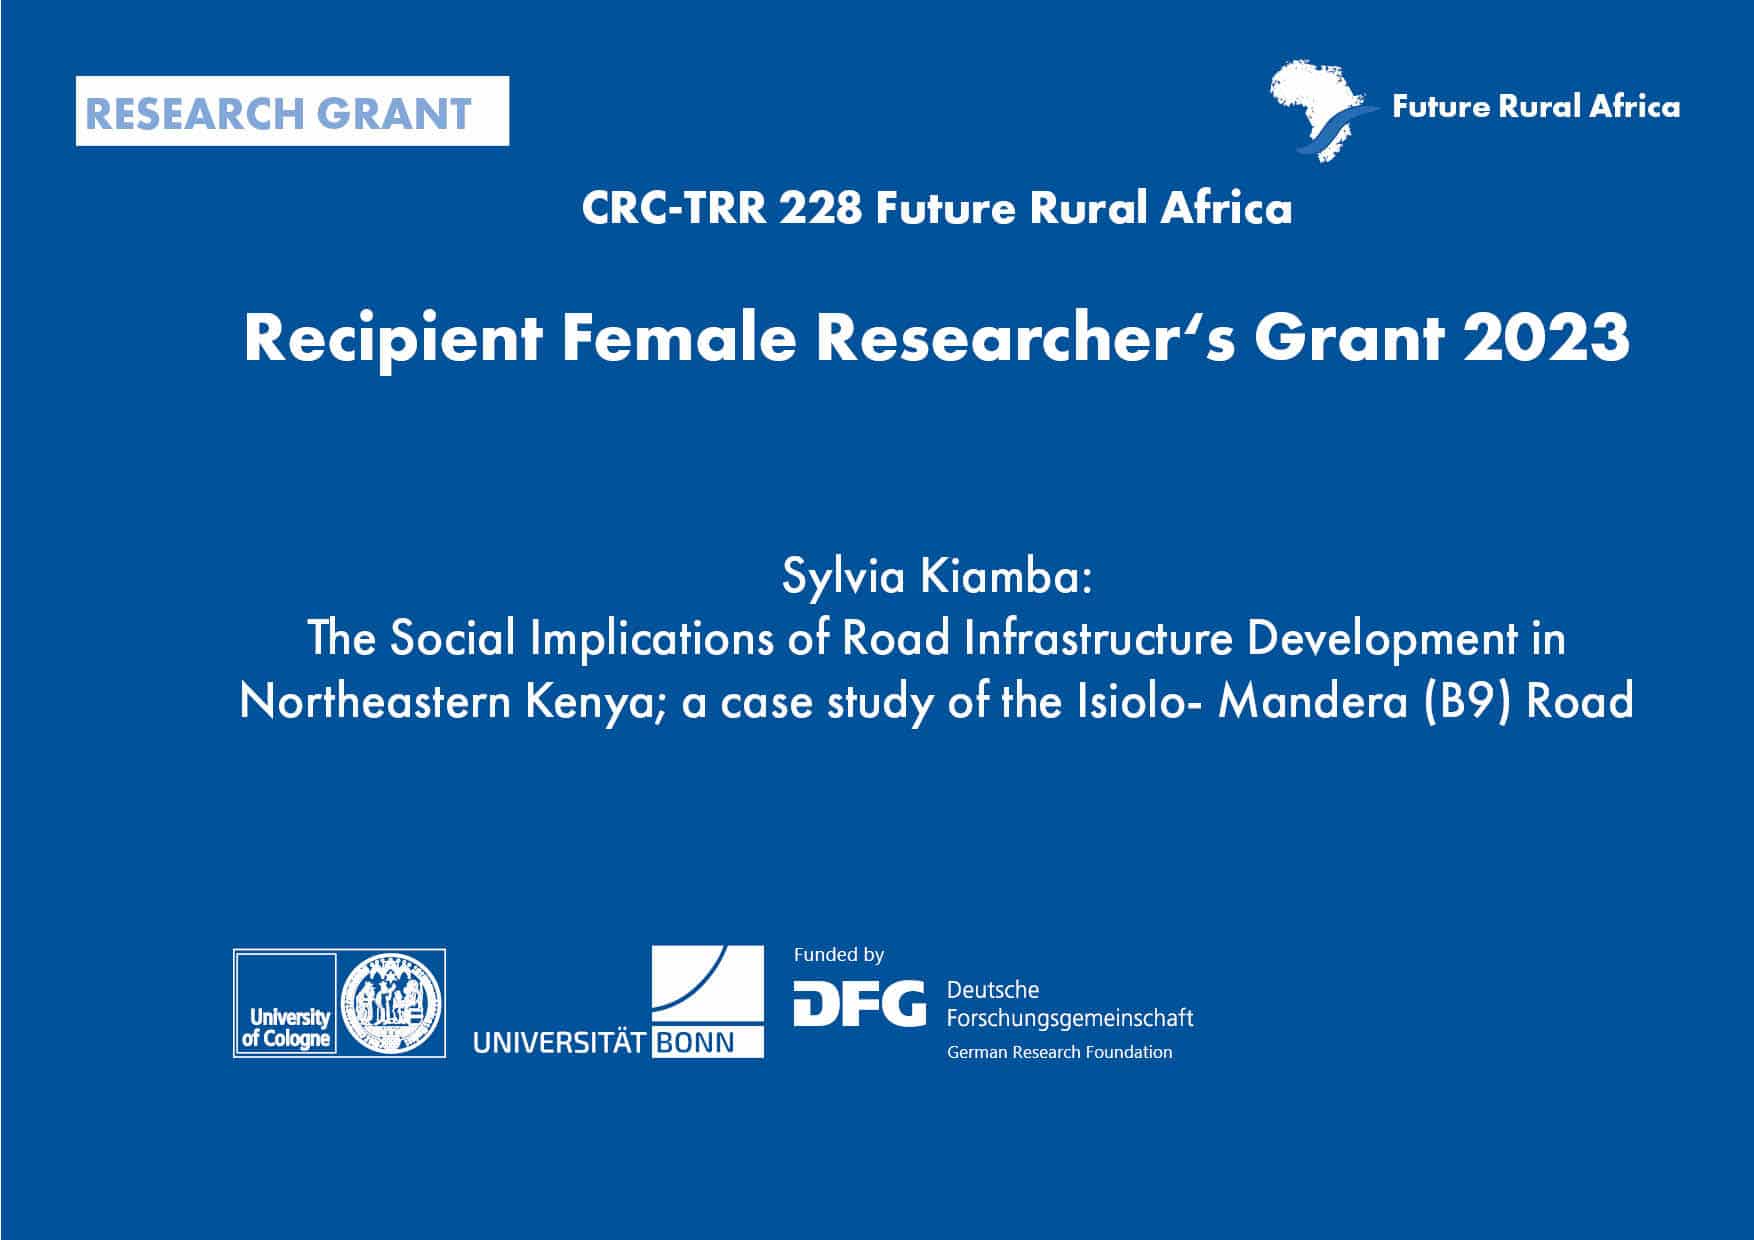 Cover Image Recipient CRC female researchers grant 2023